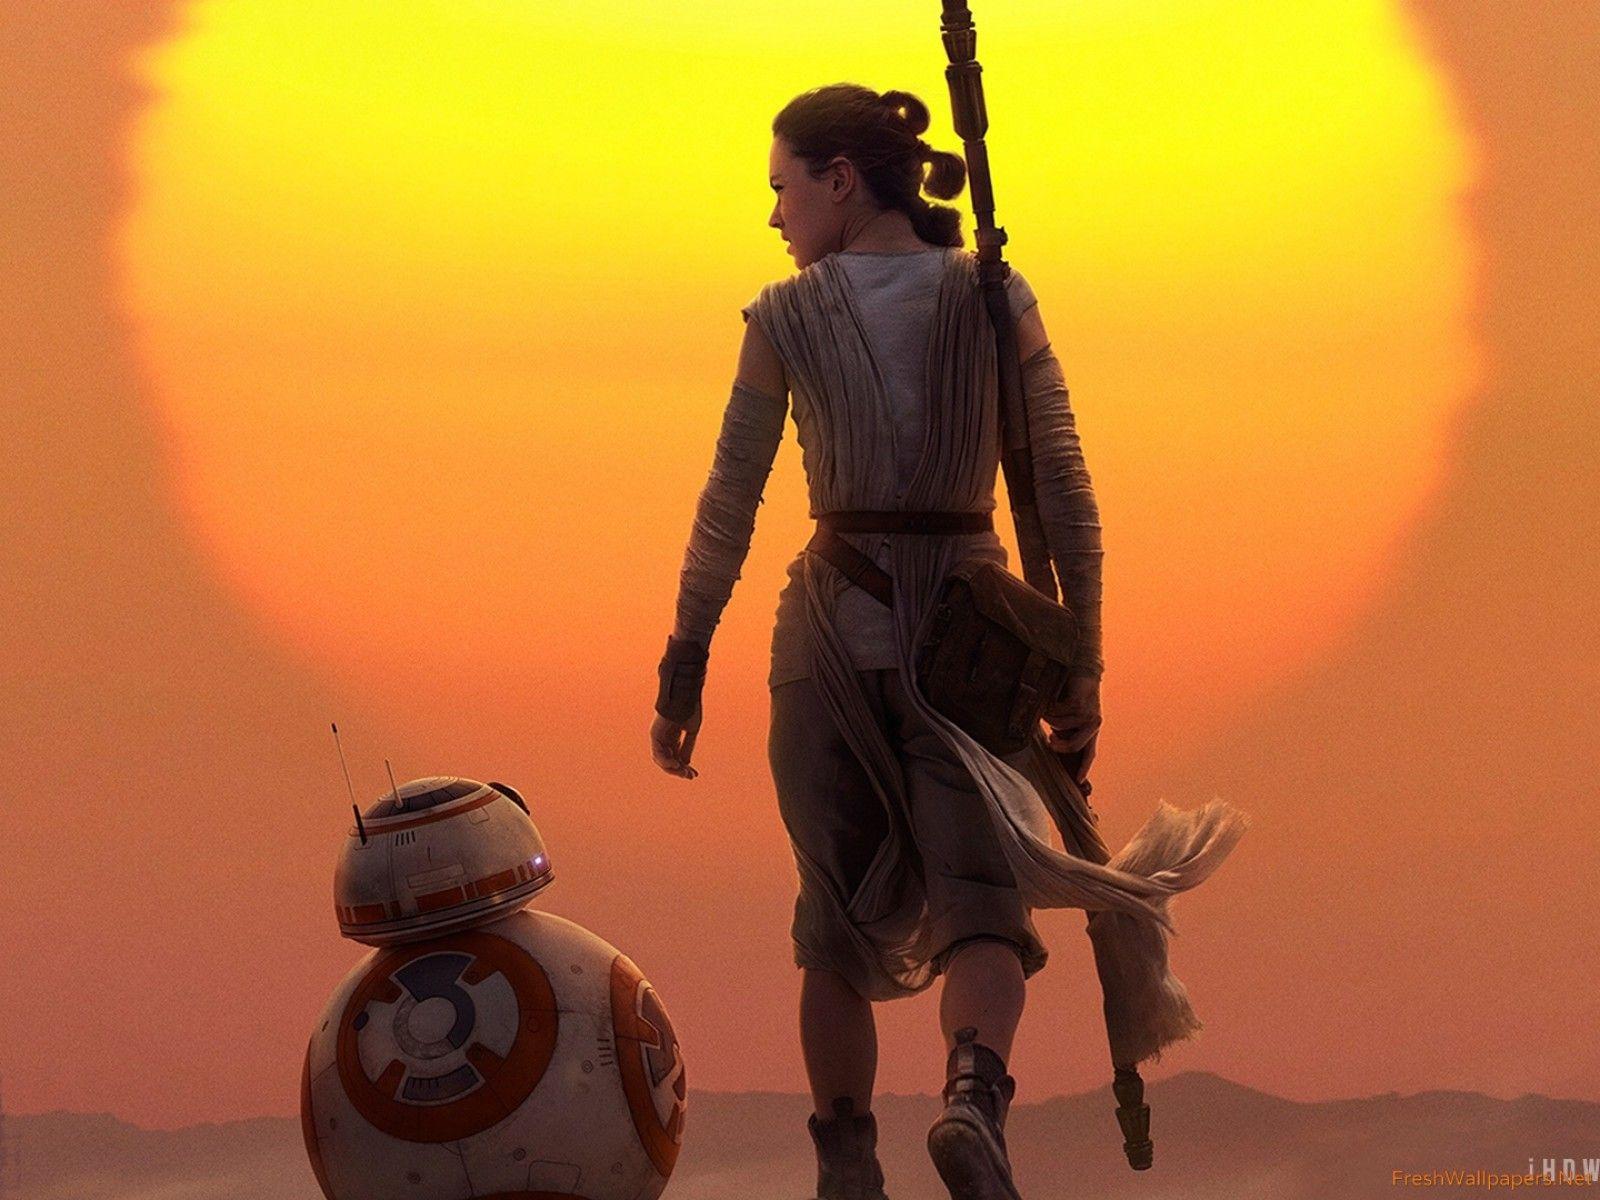 Star Wars Episode VII The Force Awakens IMAX wallpaper